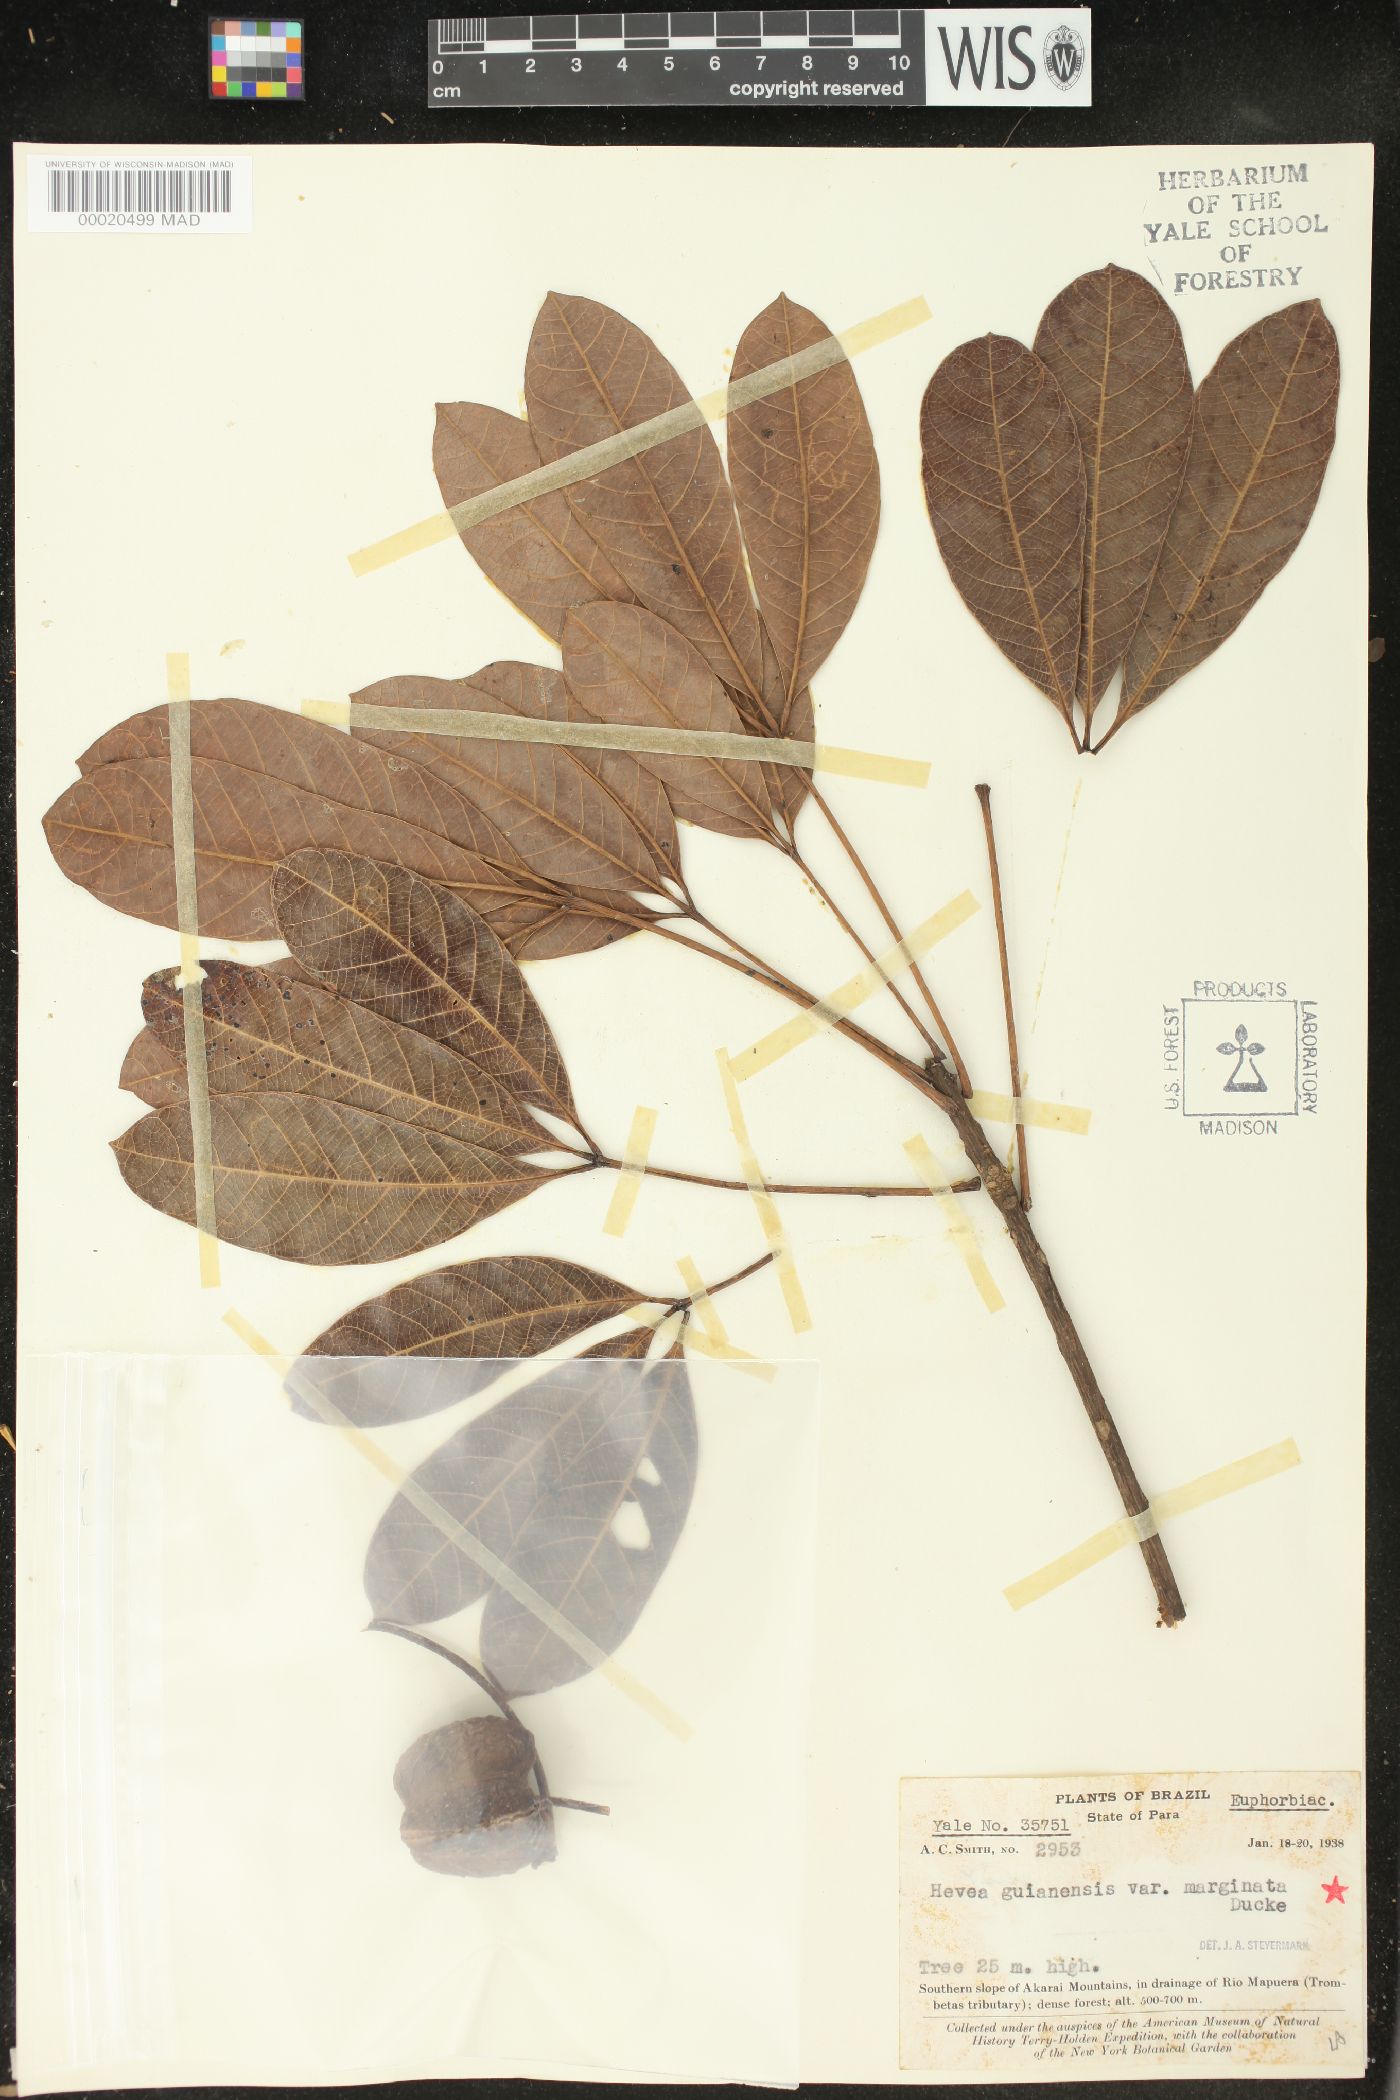 Hevea guianensis var. marginata image